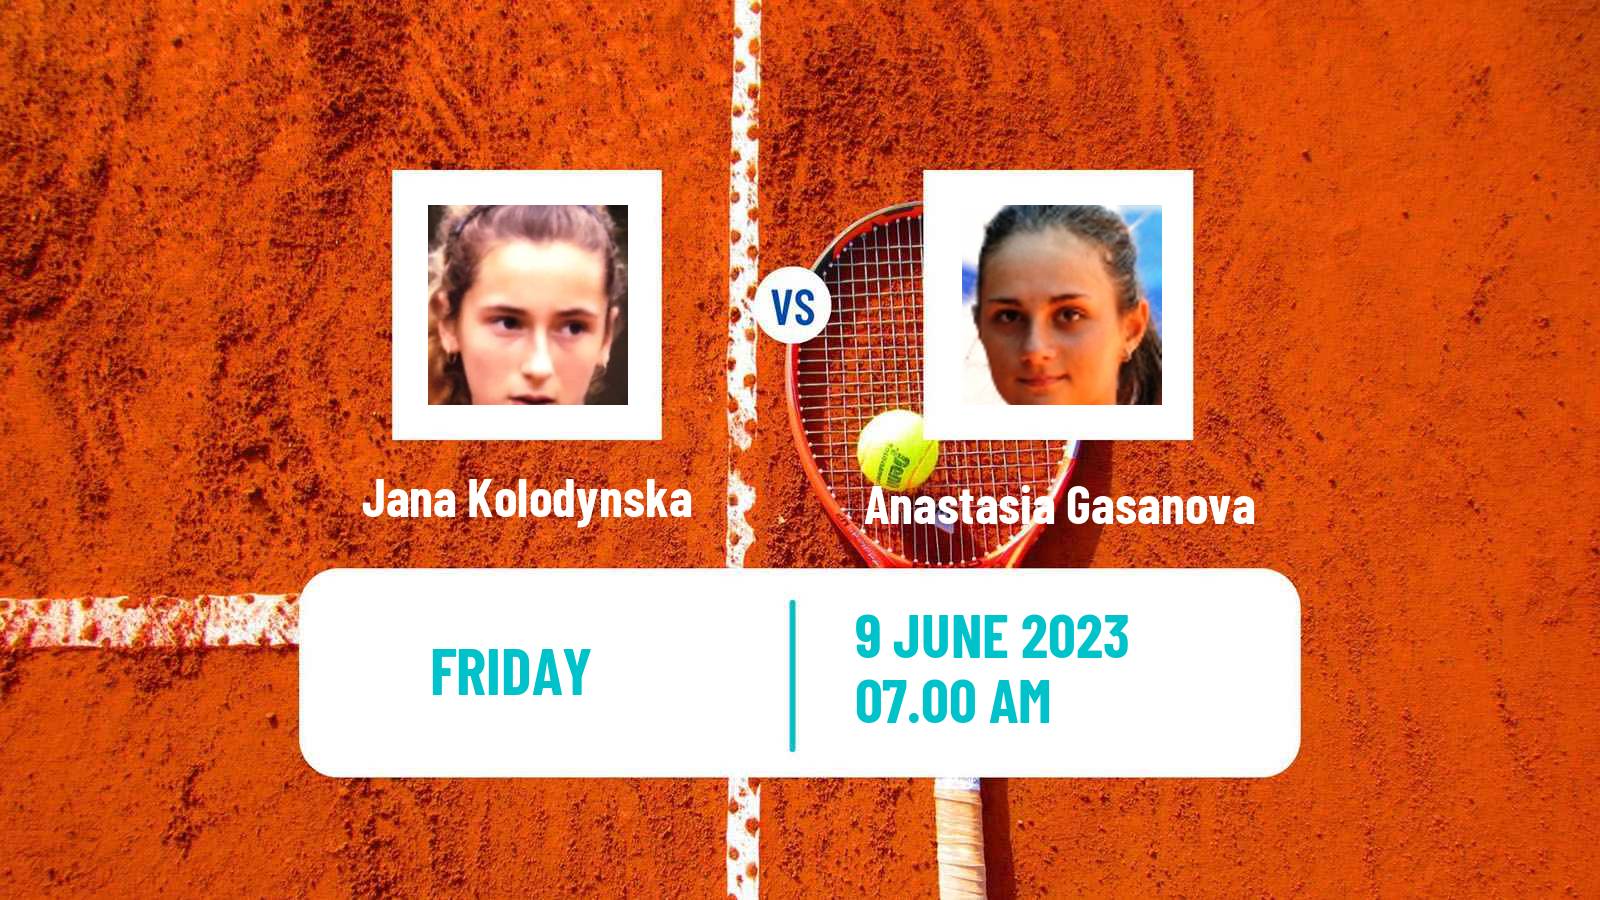 Tennis ITF W40 La Marsa Women Jana Kolodynska - Anastasia Gasanova